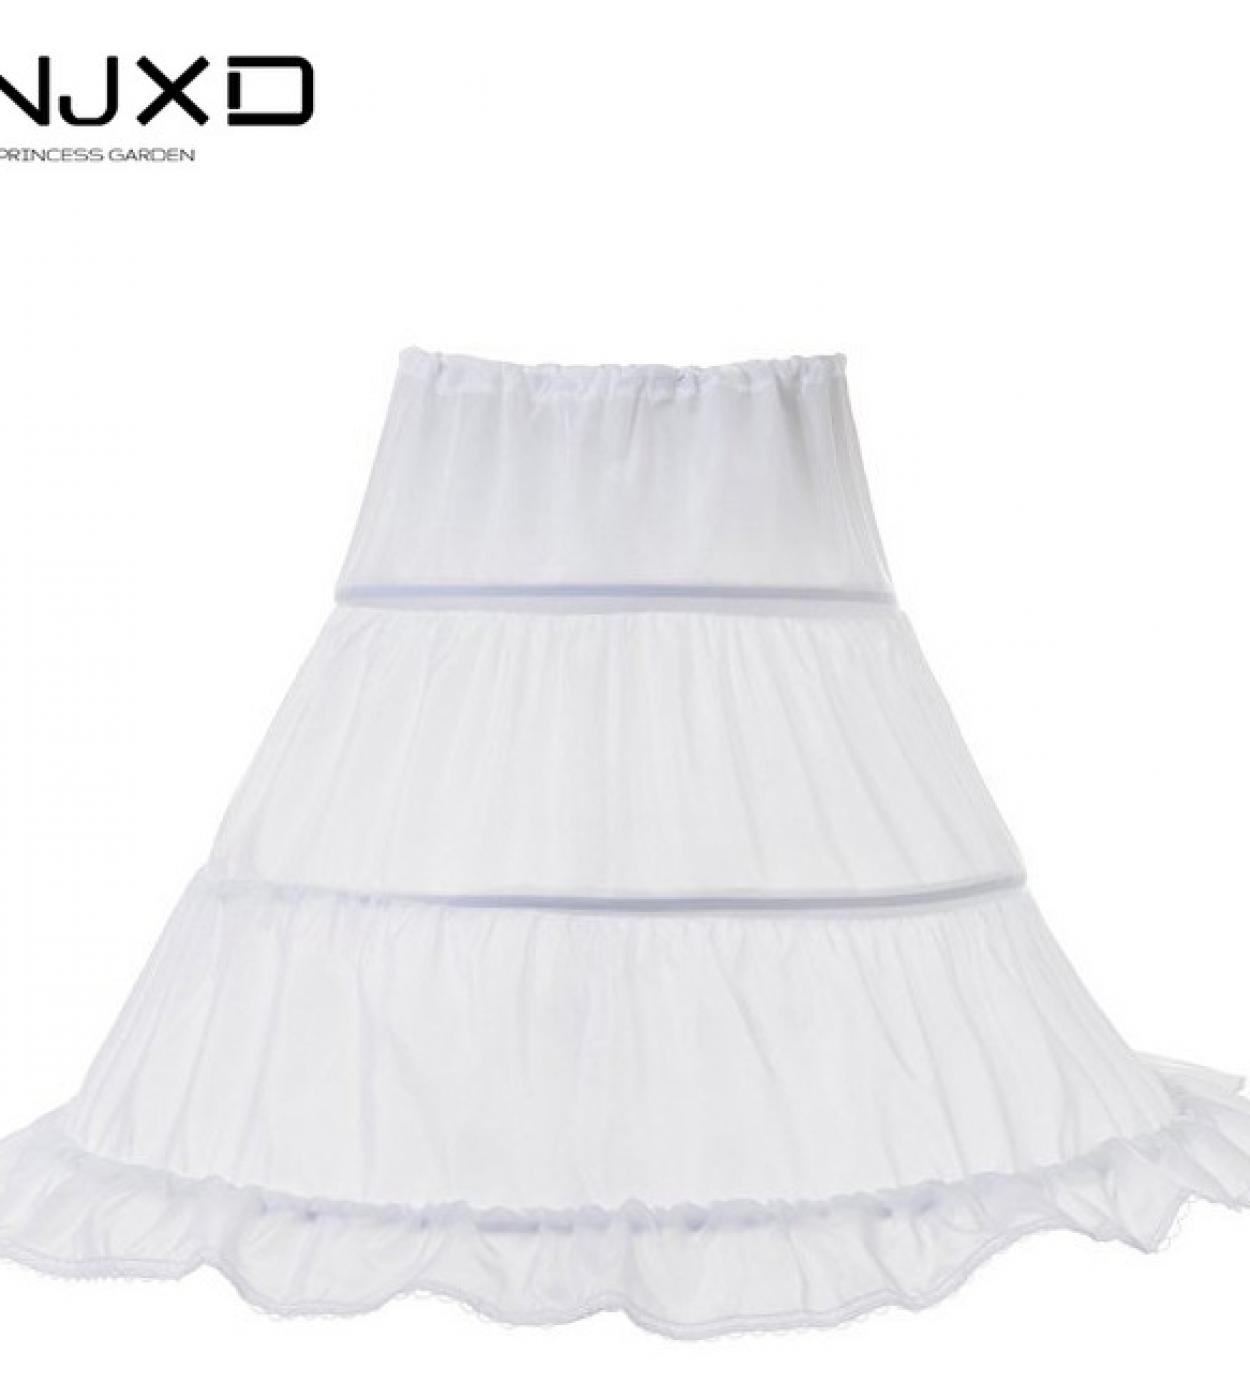 New Formal 3 Hoops Children Kid Skirt Petticoat Crinoline Underskirt Wedding Accessories For Girls Ball Gown Elastic Wai